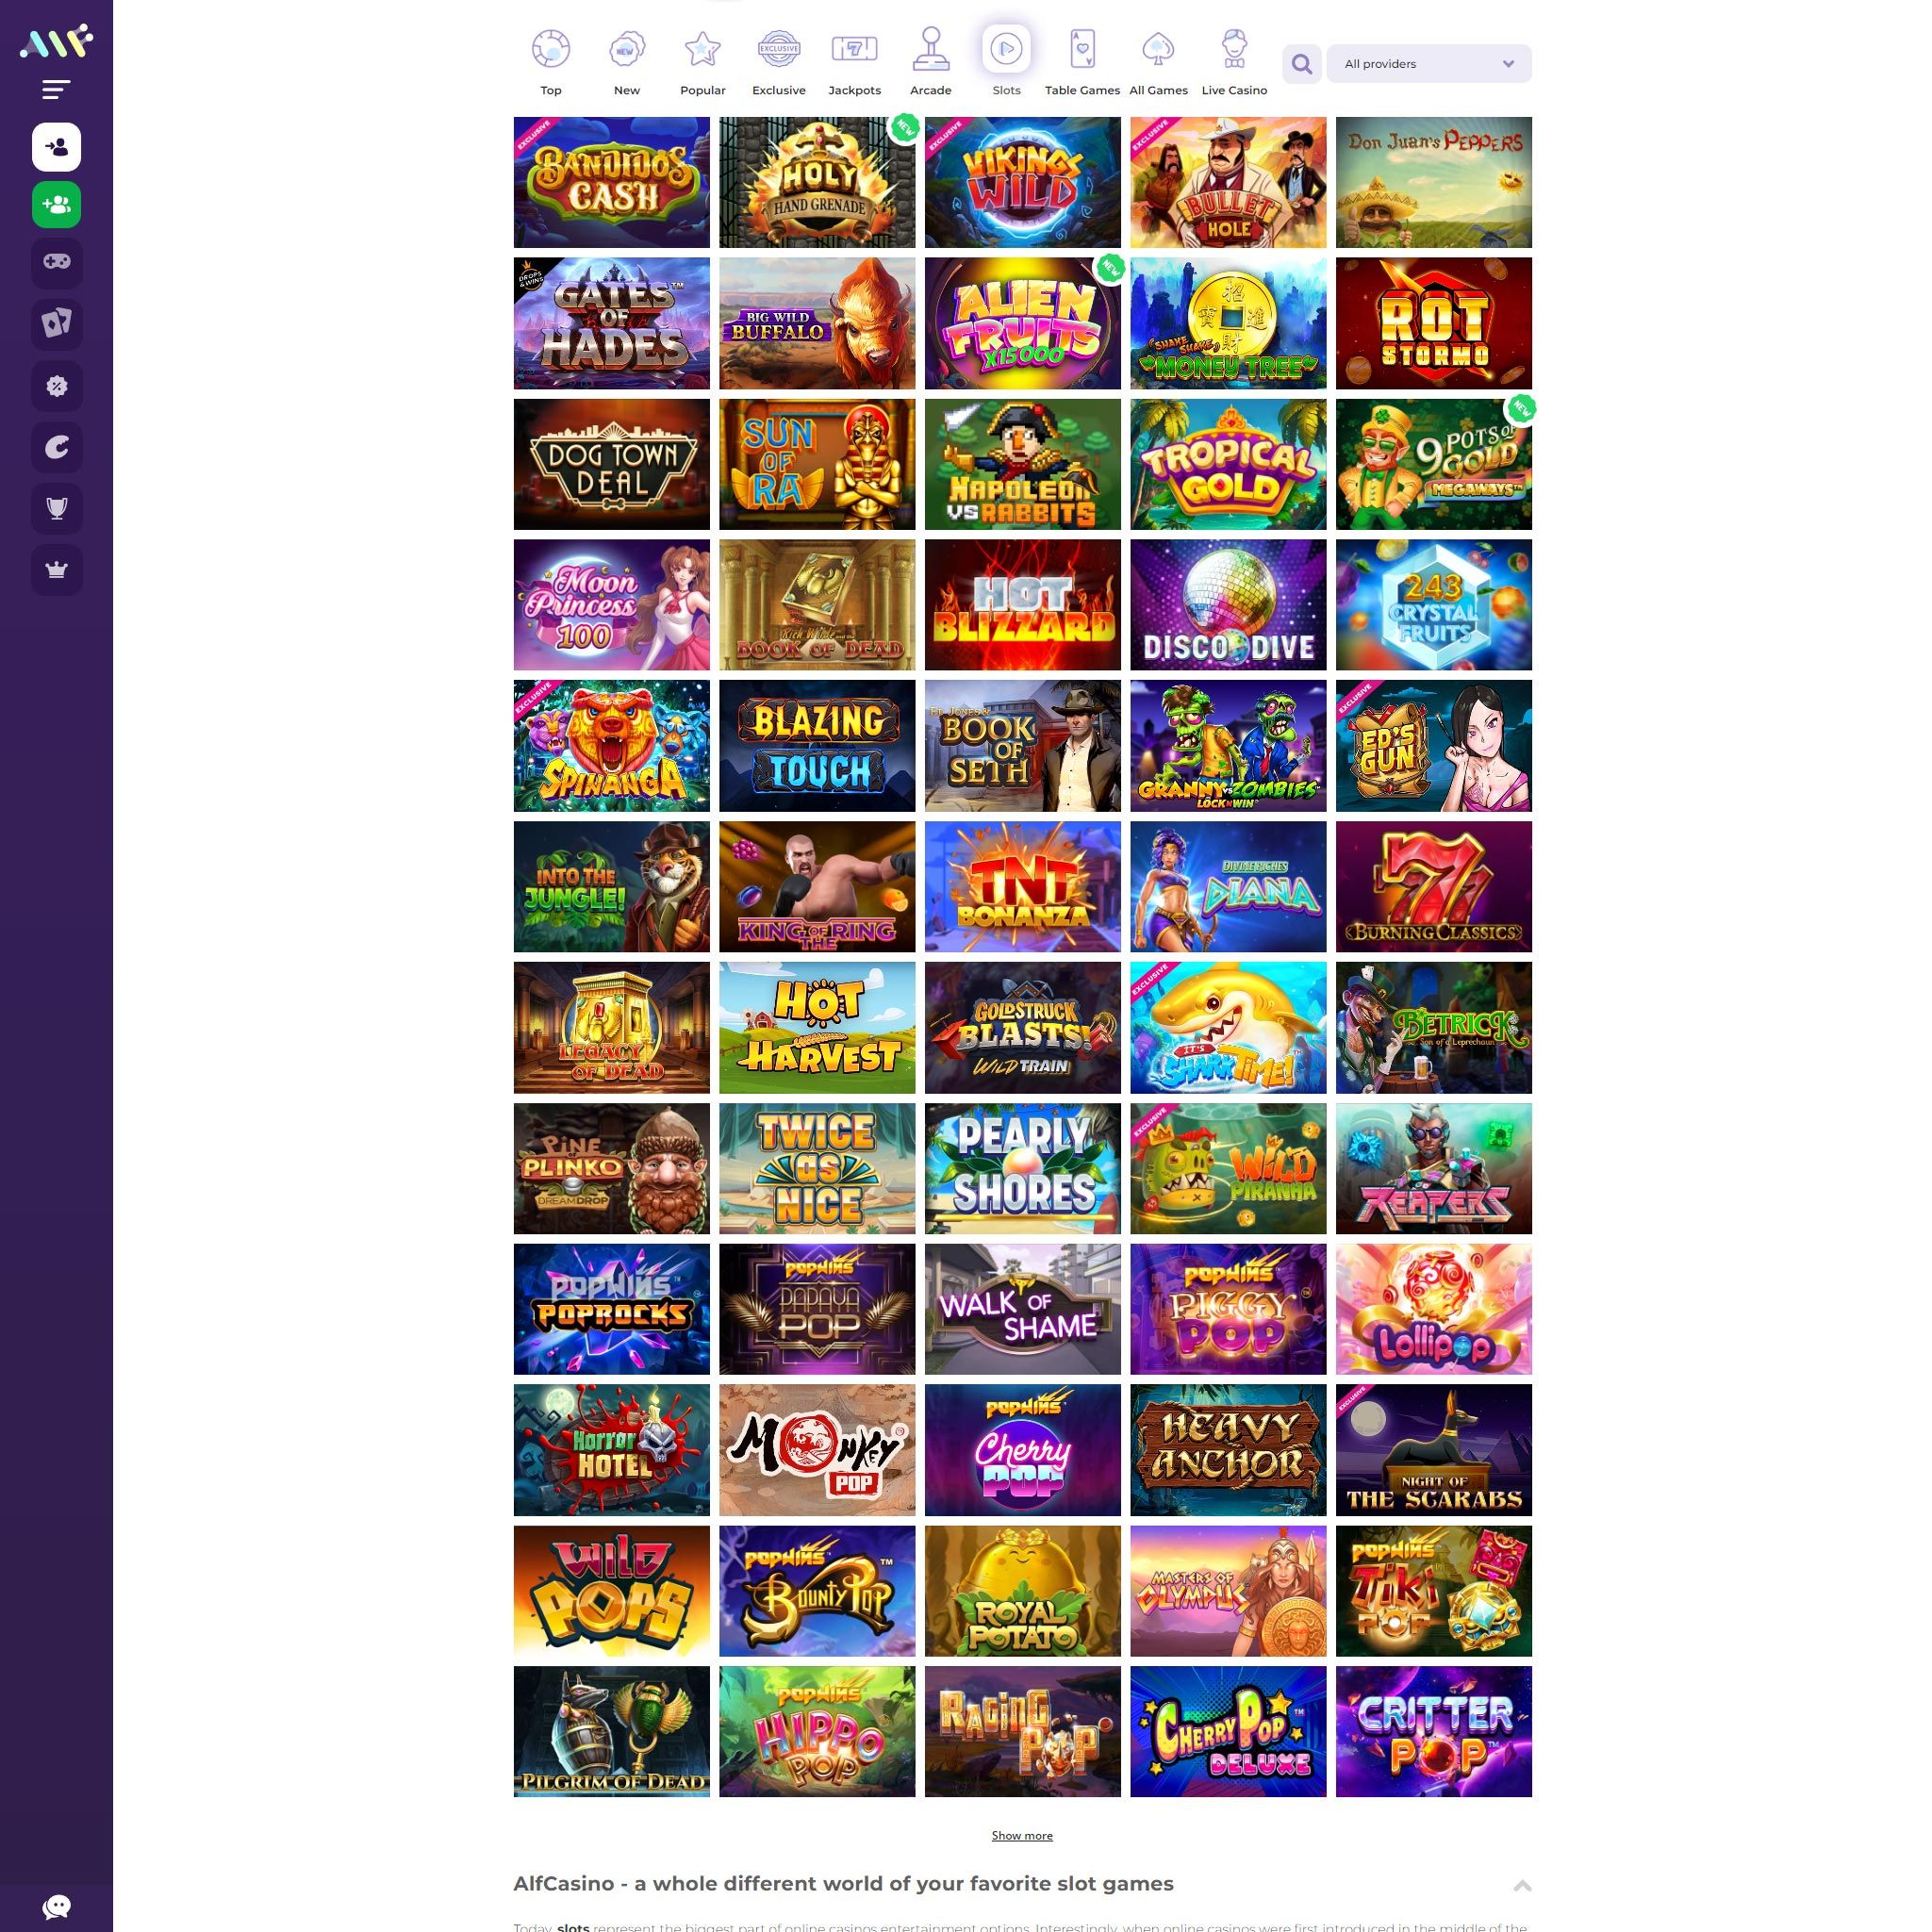 Alf Casino full games catalogue